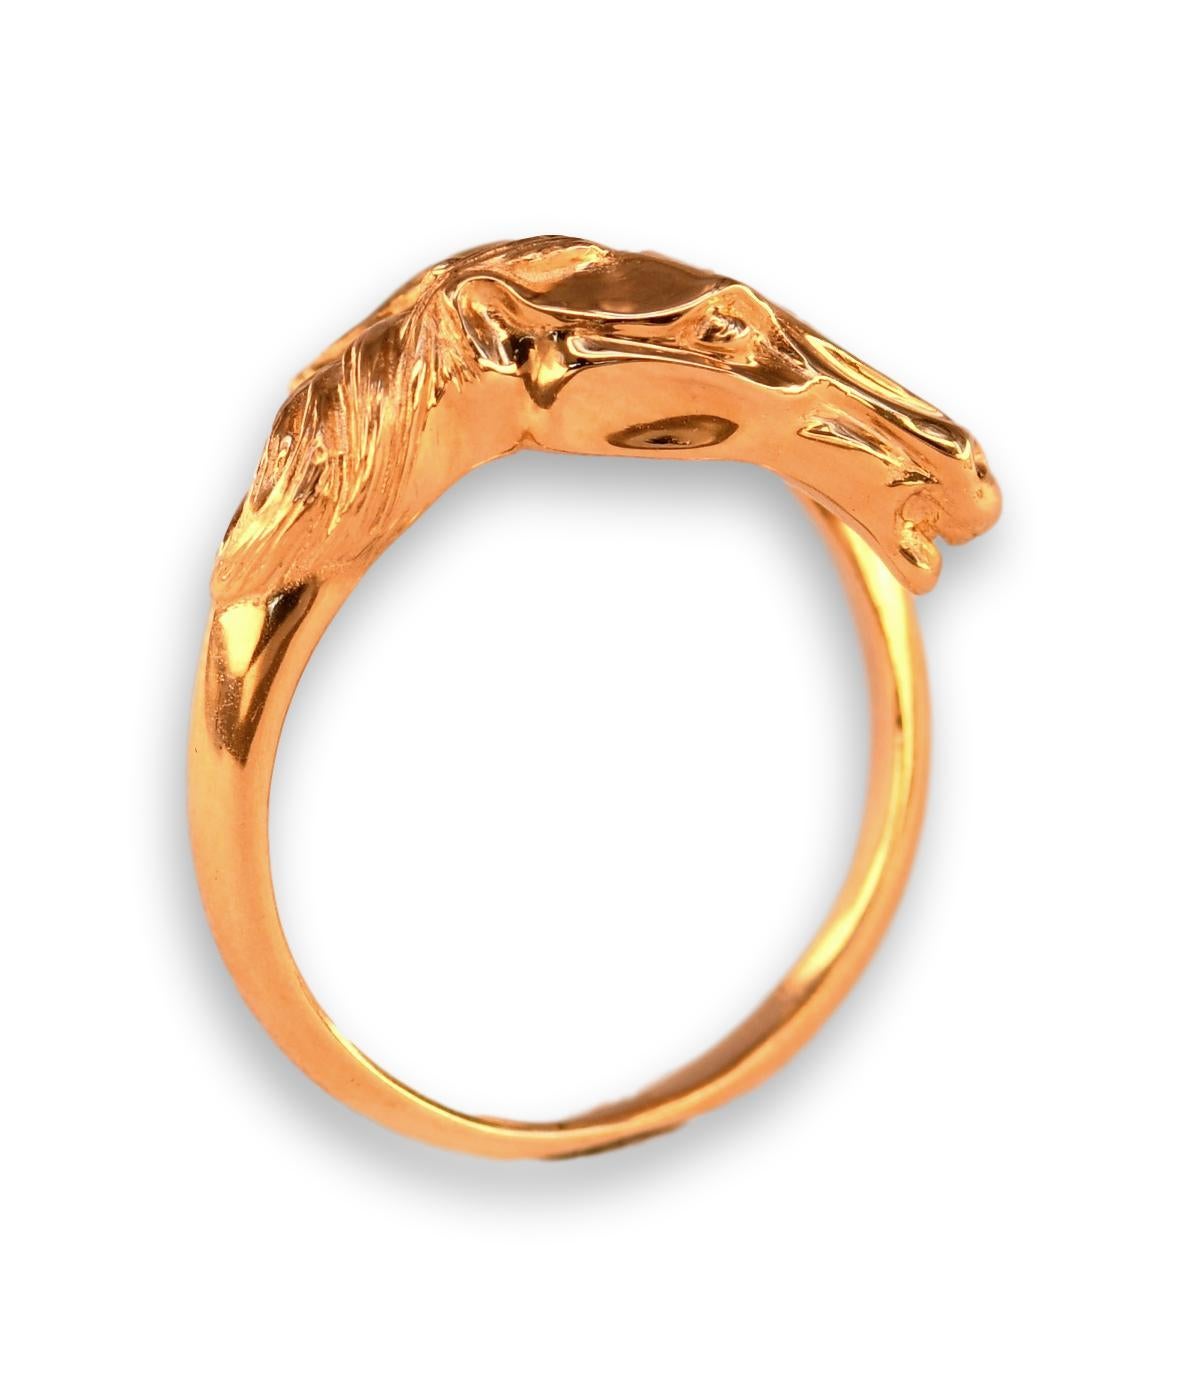 Art Nouveau Style 18 Karat Gold Horse Crossover Ring 1